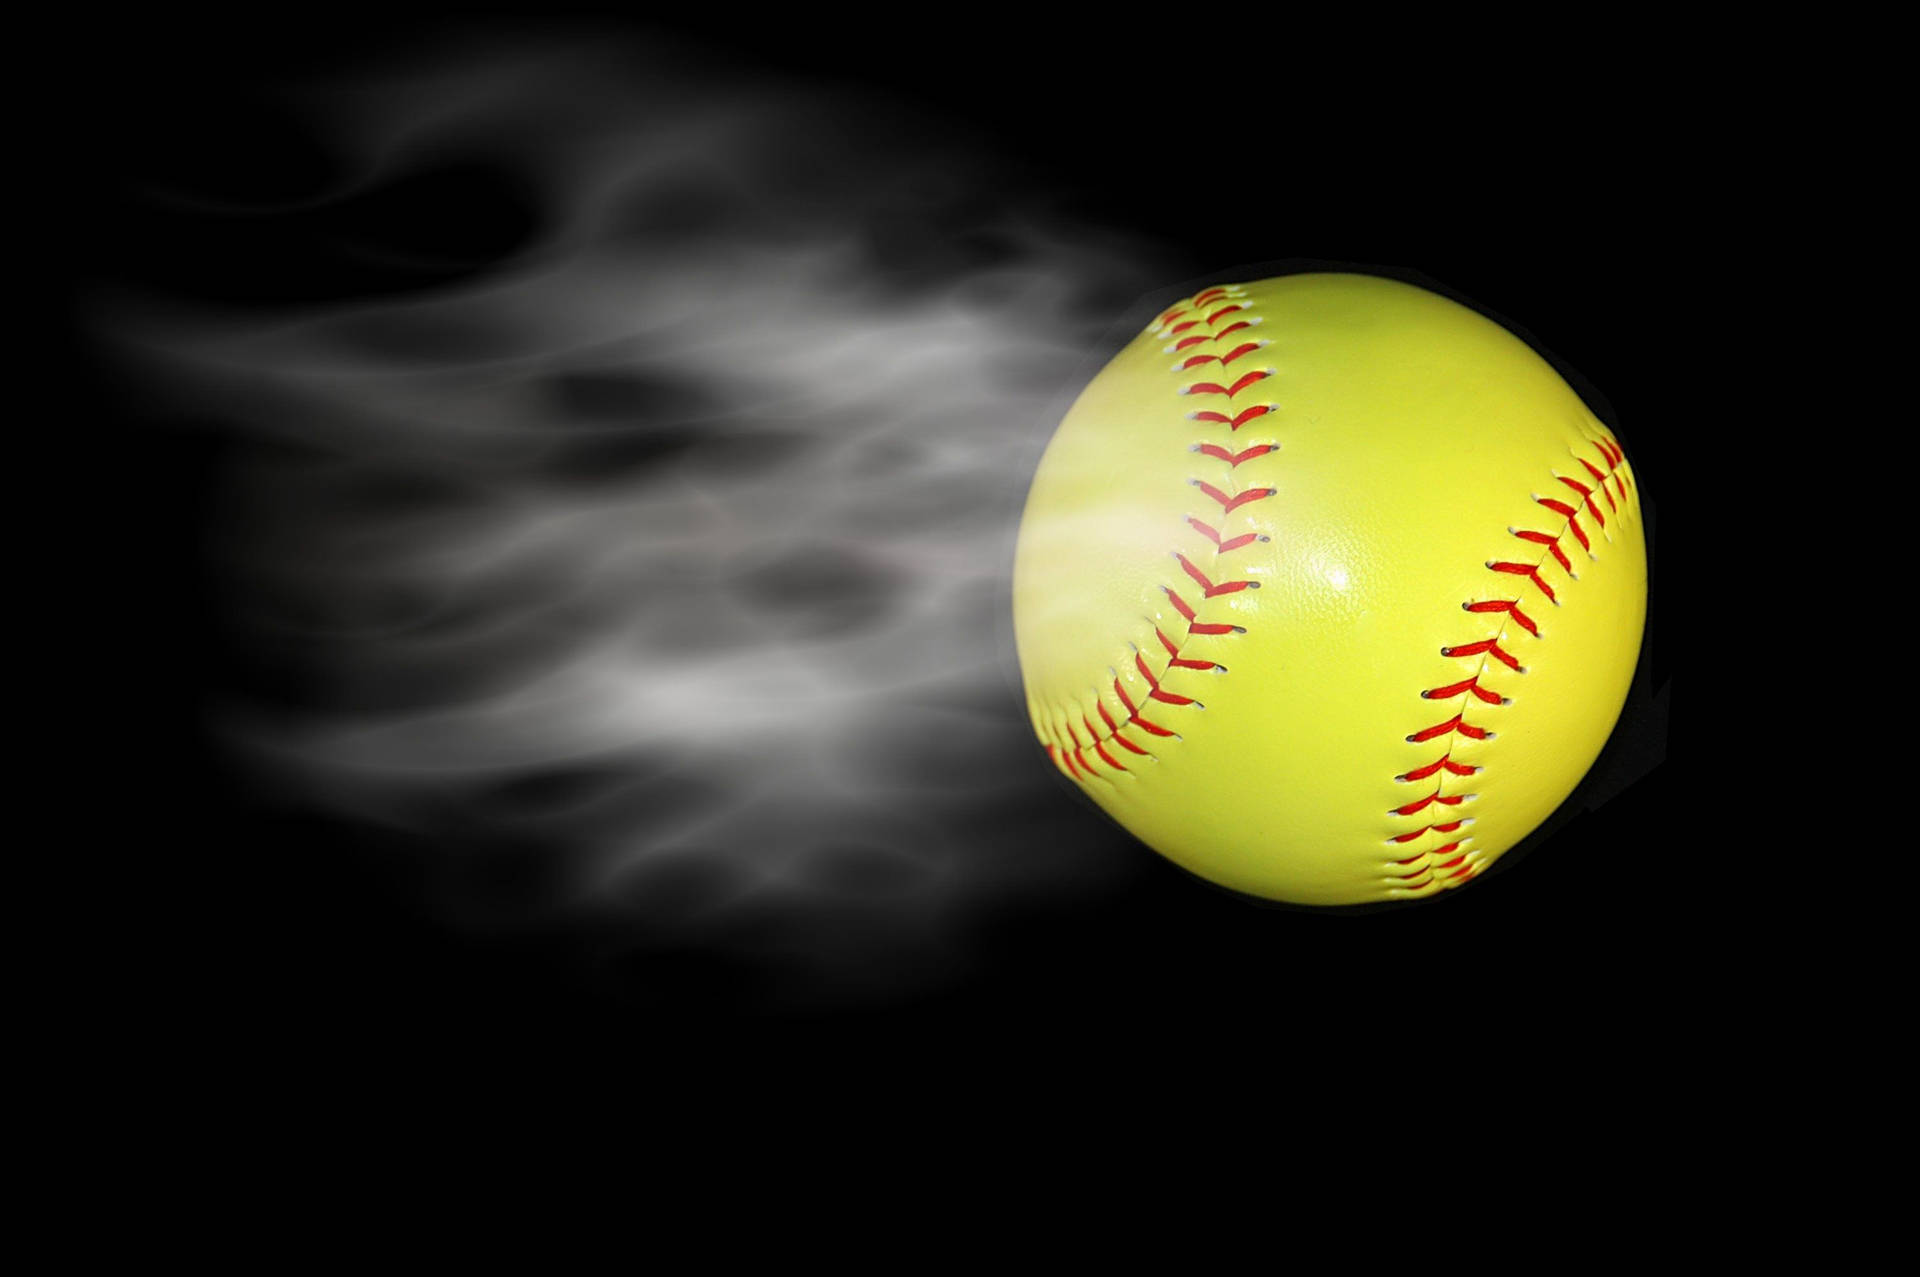 Softball With Trailing White Smoke Effect Wallpaper